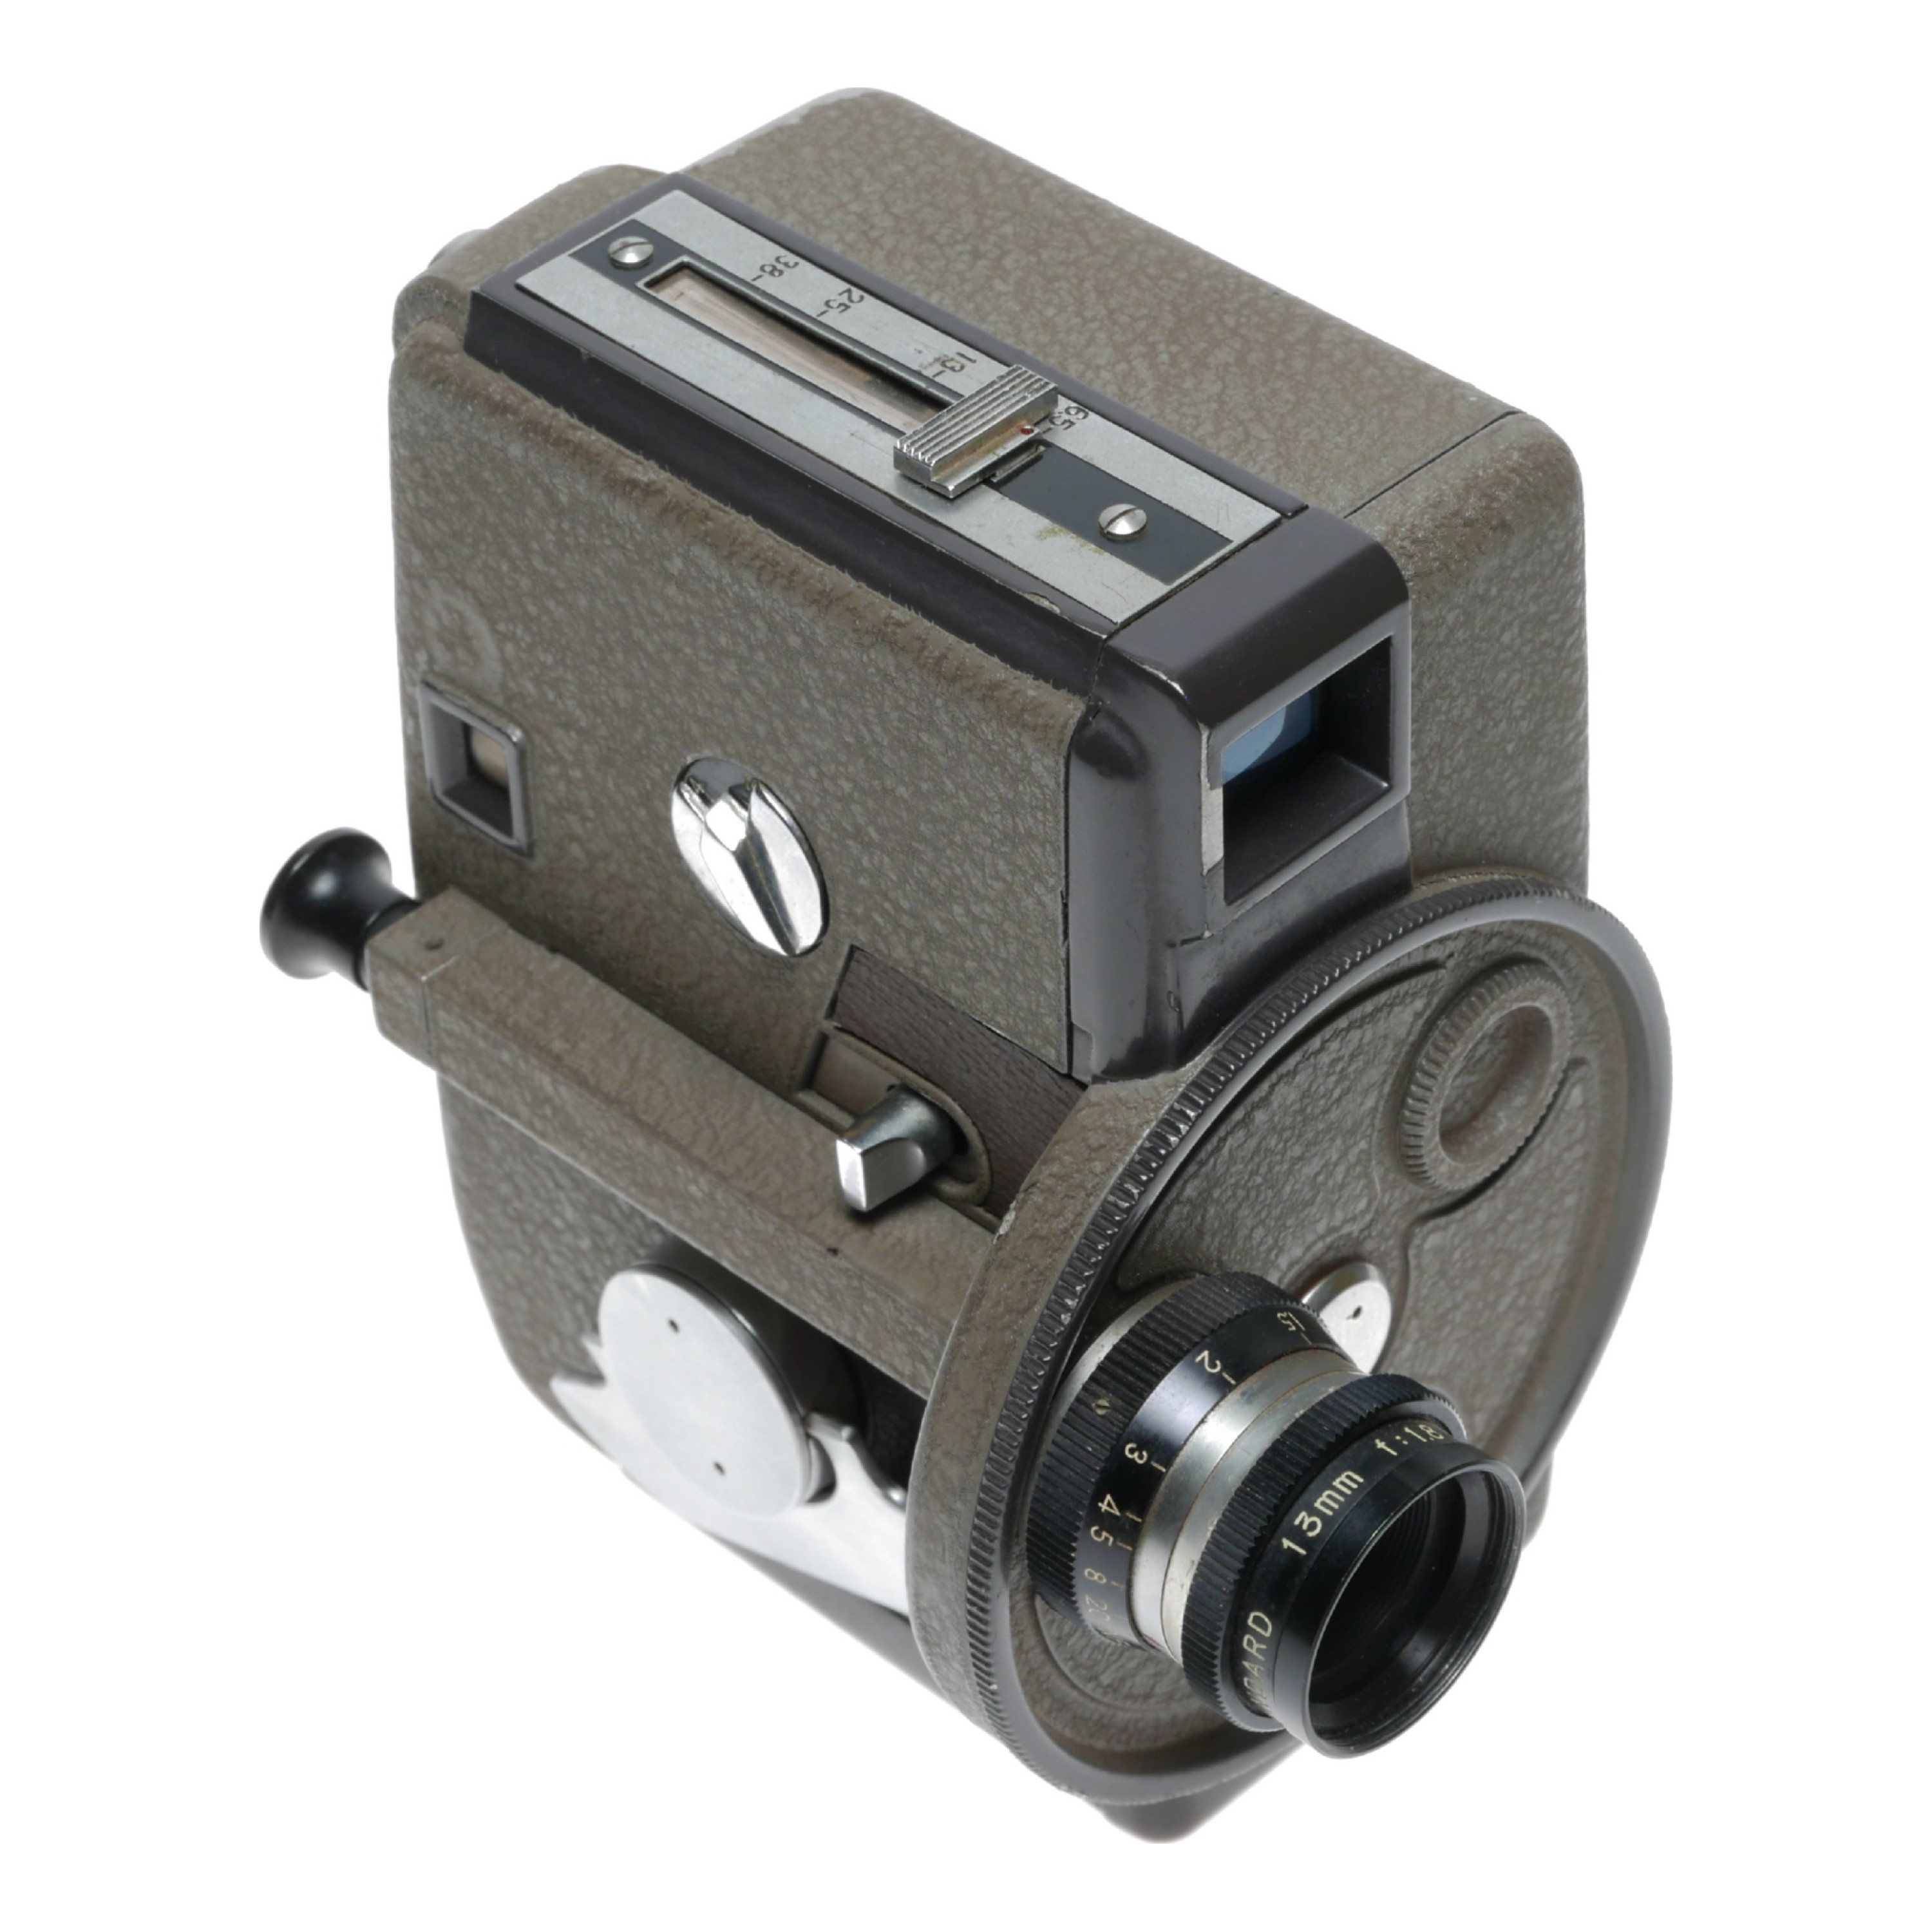 Cinekon Eight 8mm Film Camera Standard 13mm f:1.8 Lens